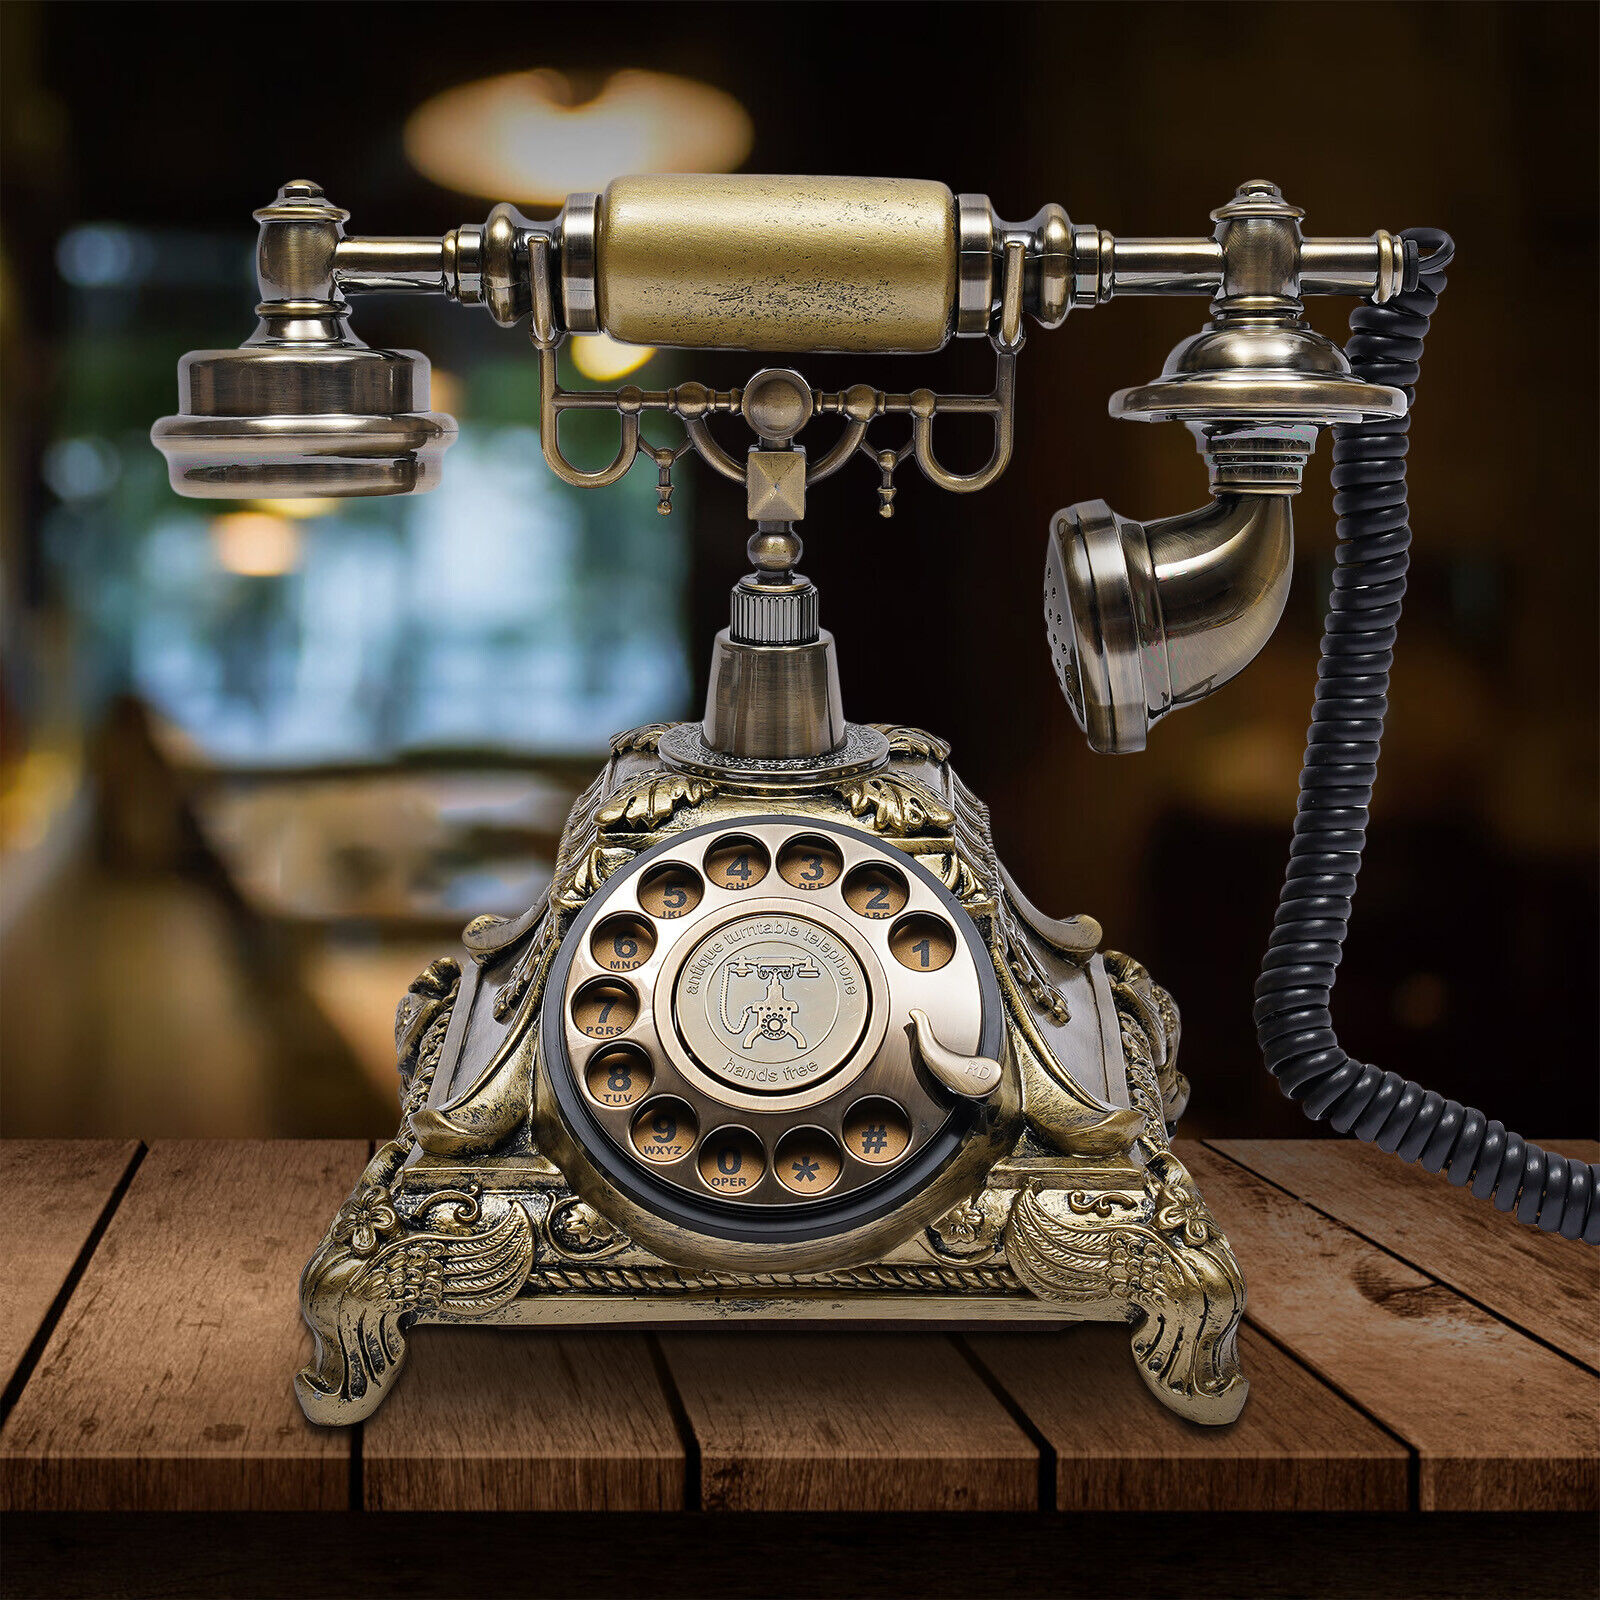 Retro Vintage Antique Handset Home Dial Phone Landline Telephone Old Fashion NEW